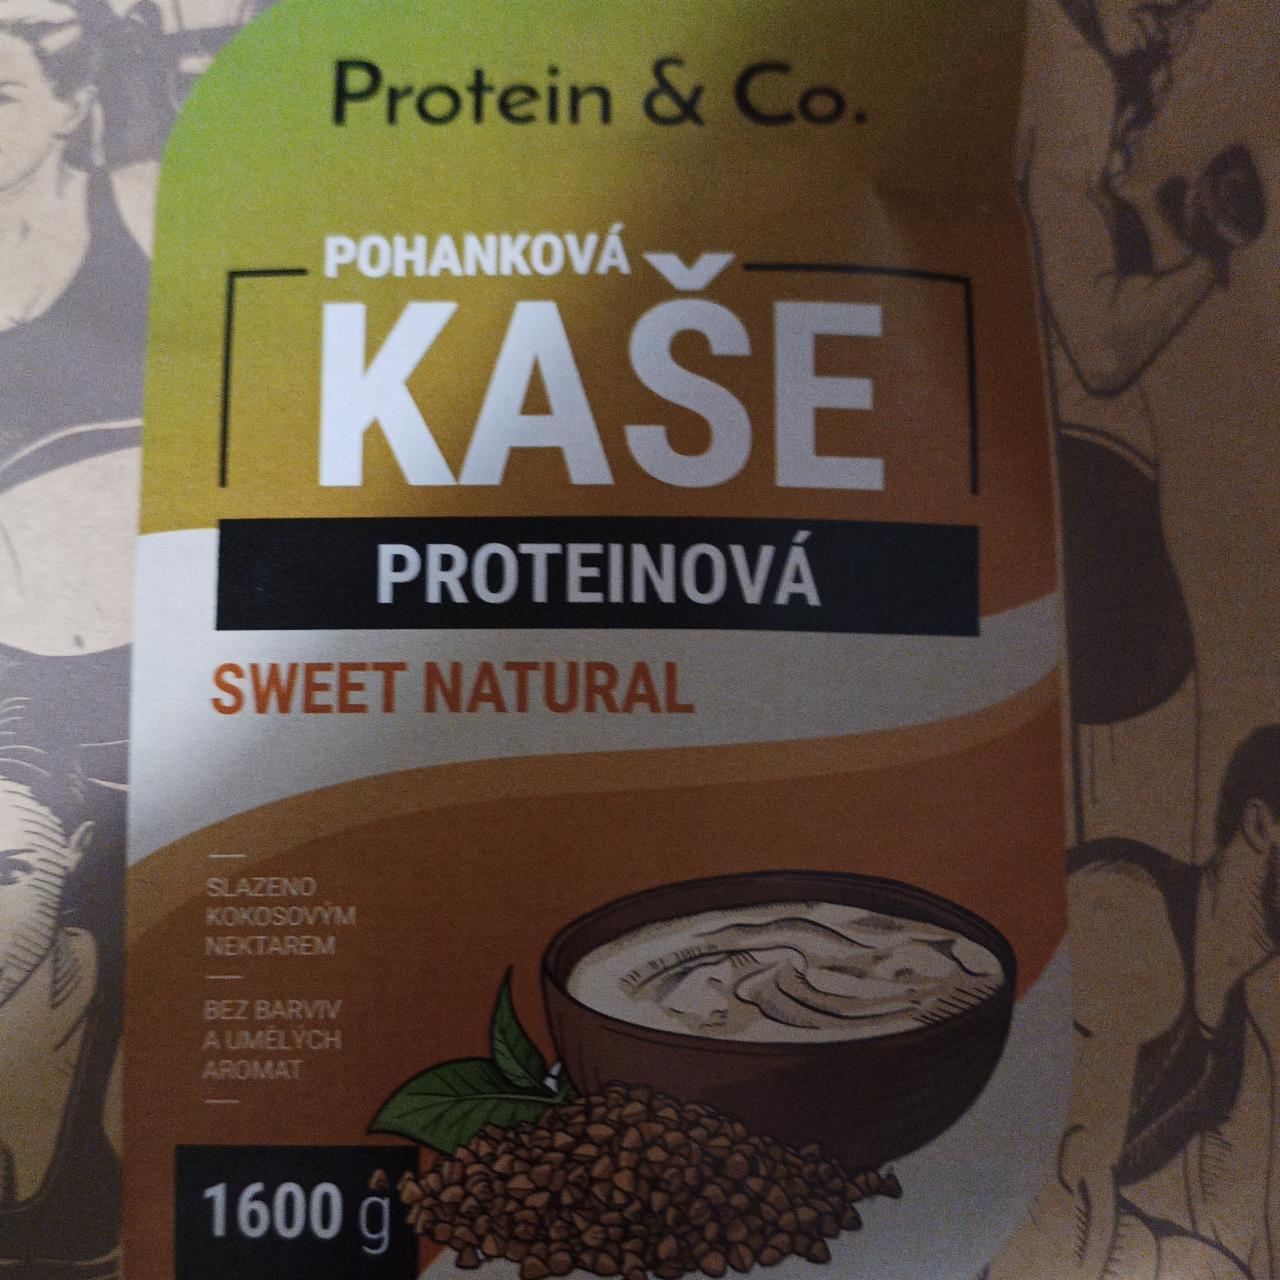 Fotografie - Pohanková proteinová kaše Sweet natural Protein & Co.